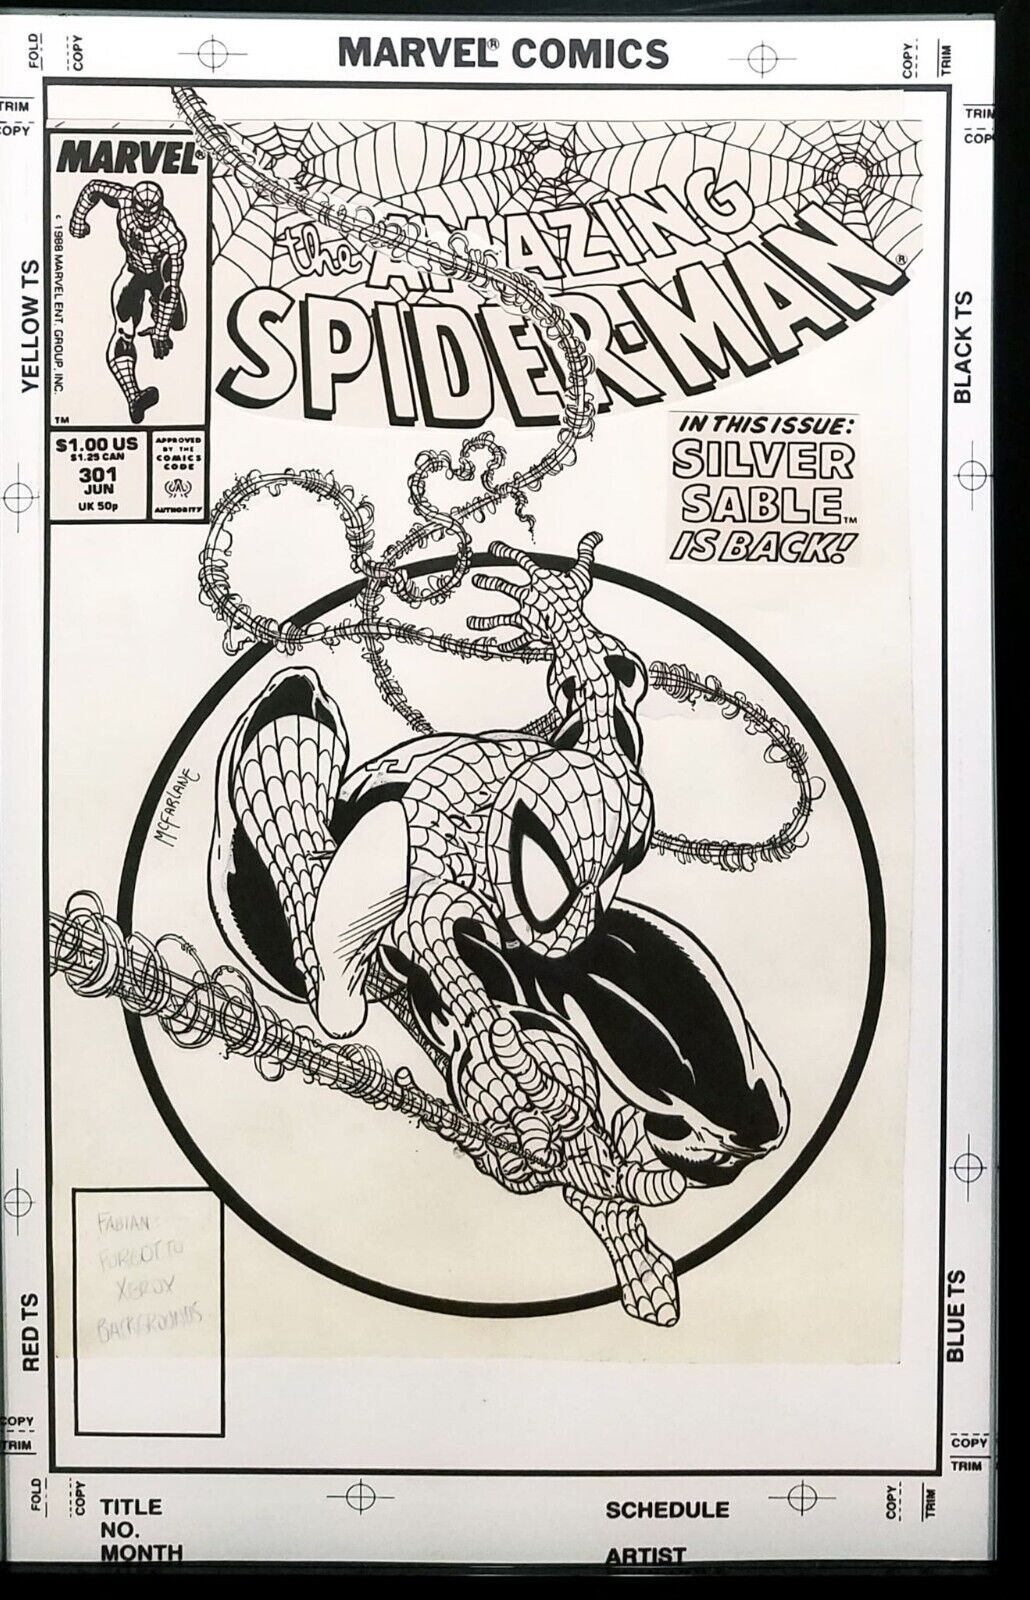 Amazing Spider-Man #301 by Todd McFarlane 11x17 FRAMED Original Art Print Comic